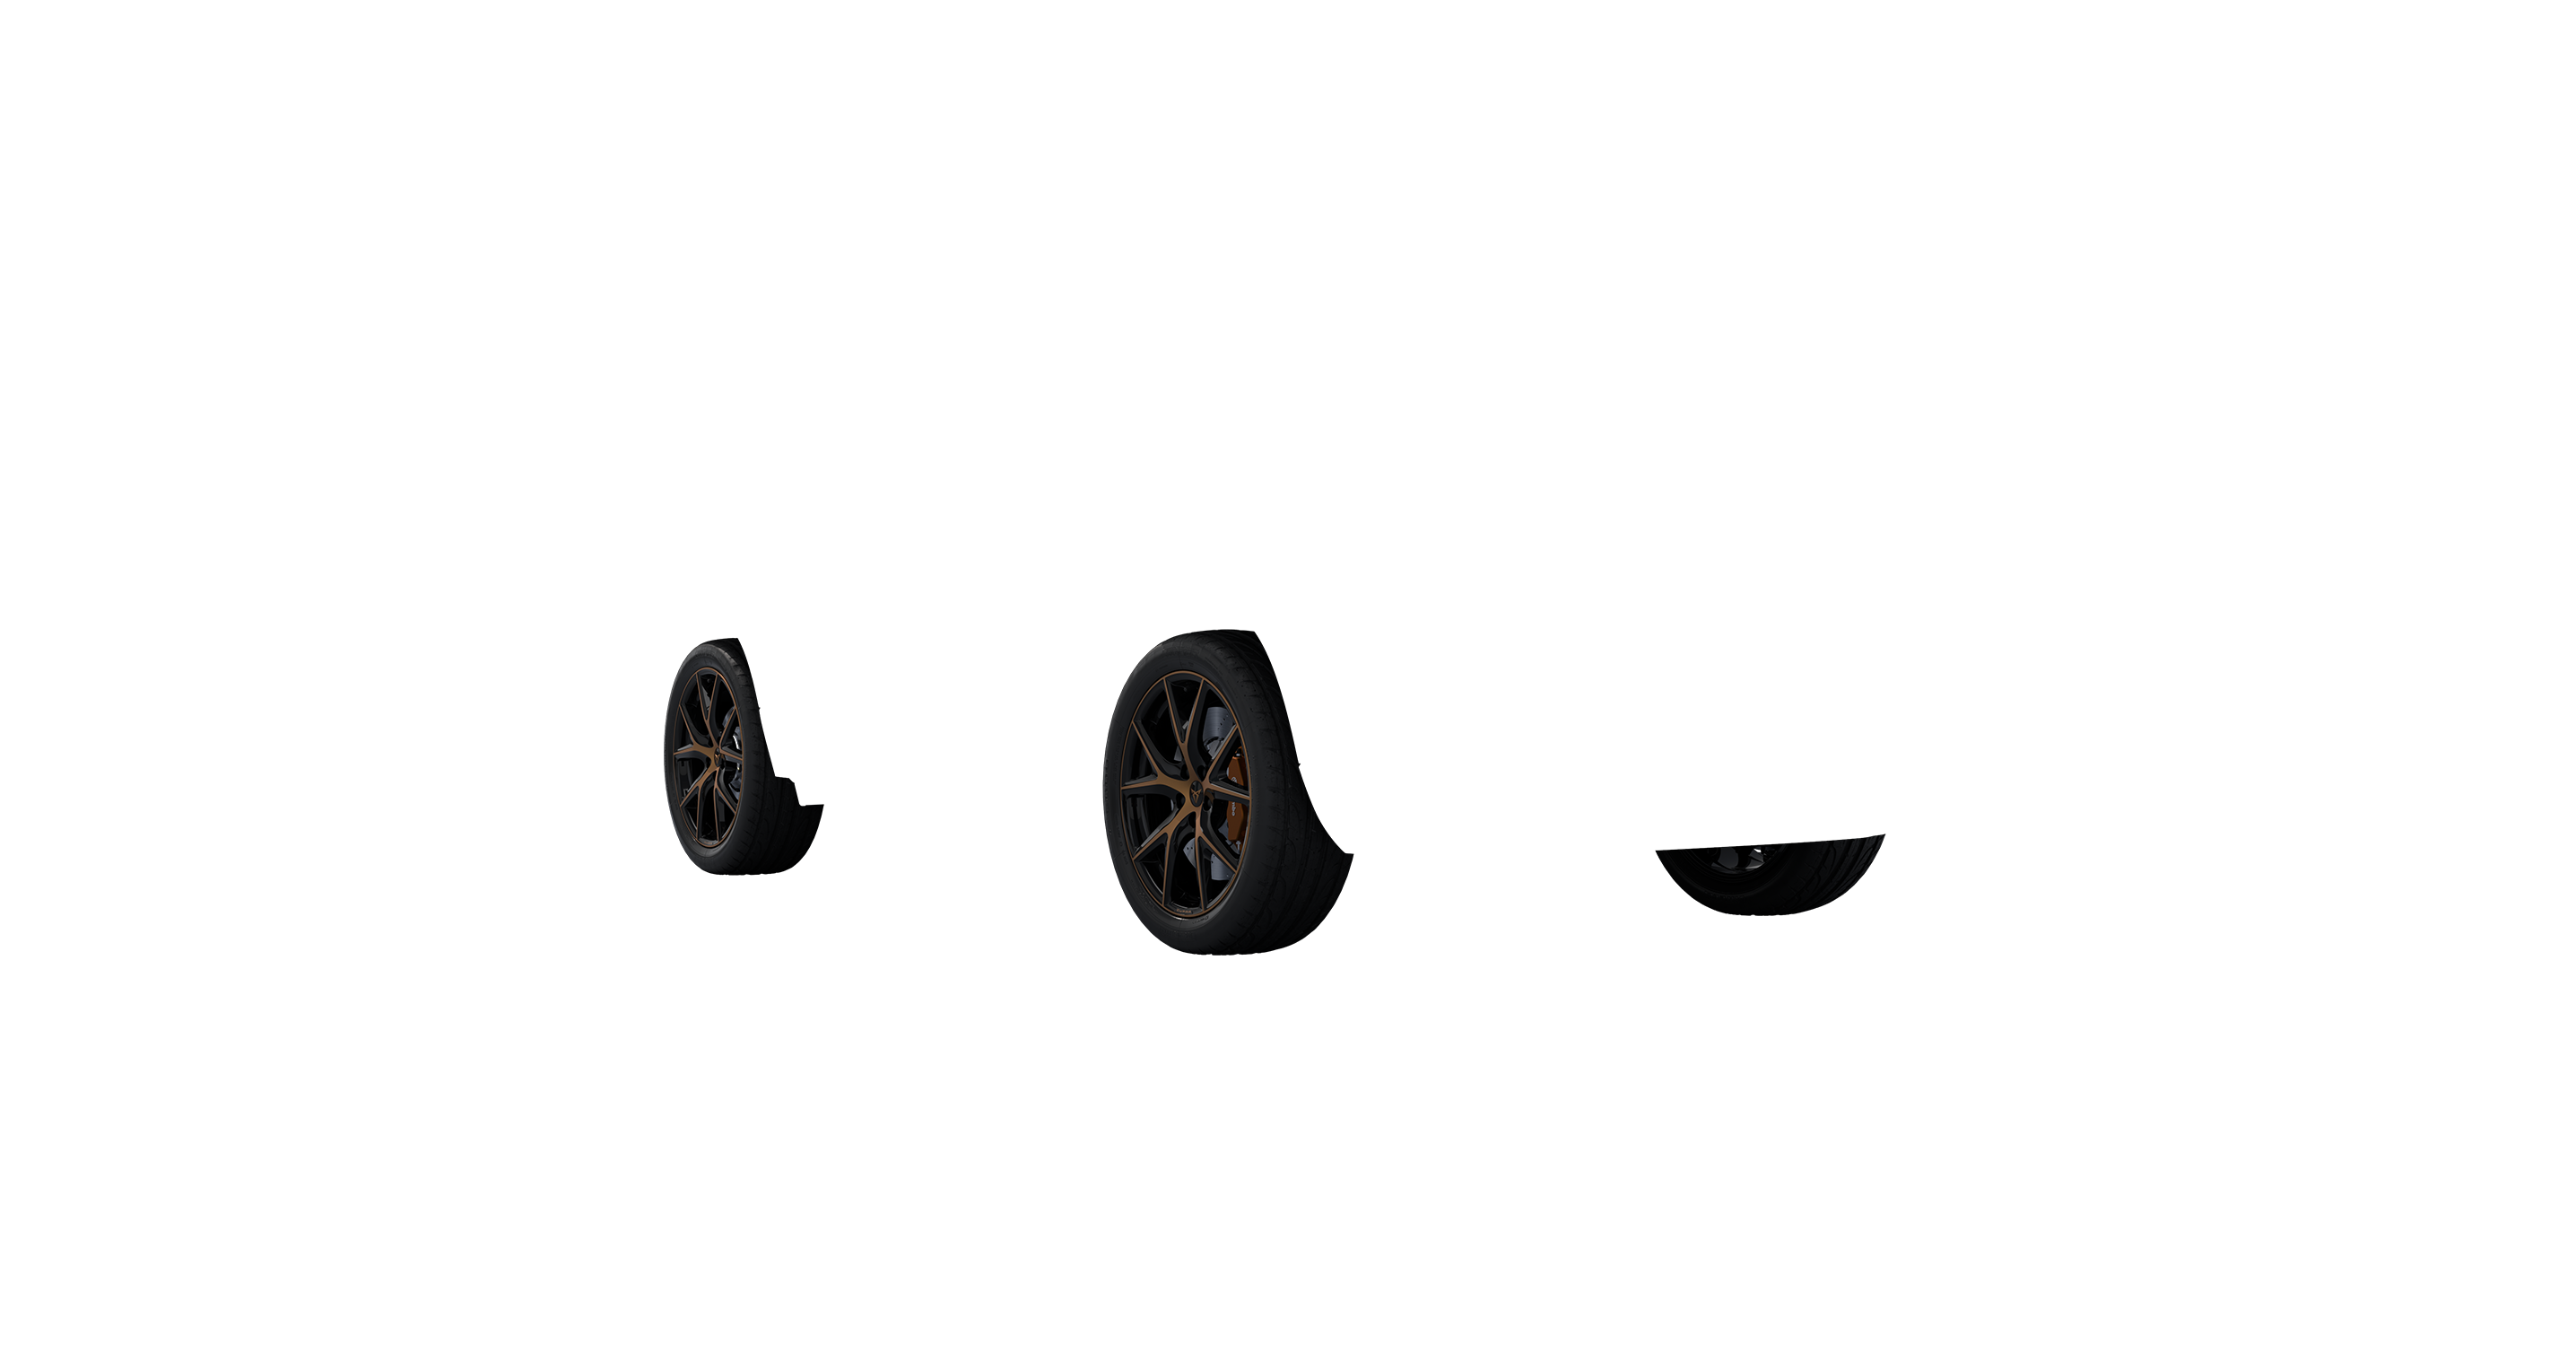 cupra-ateca-19-exclusive-r-alloy-wheels-sport-black-and-copper